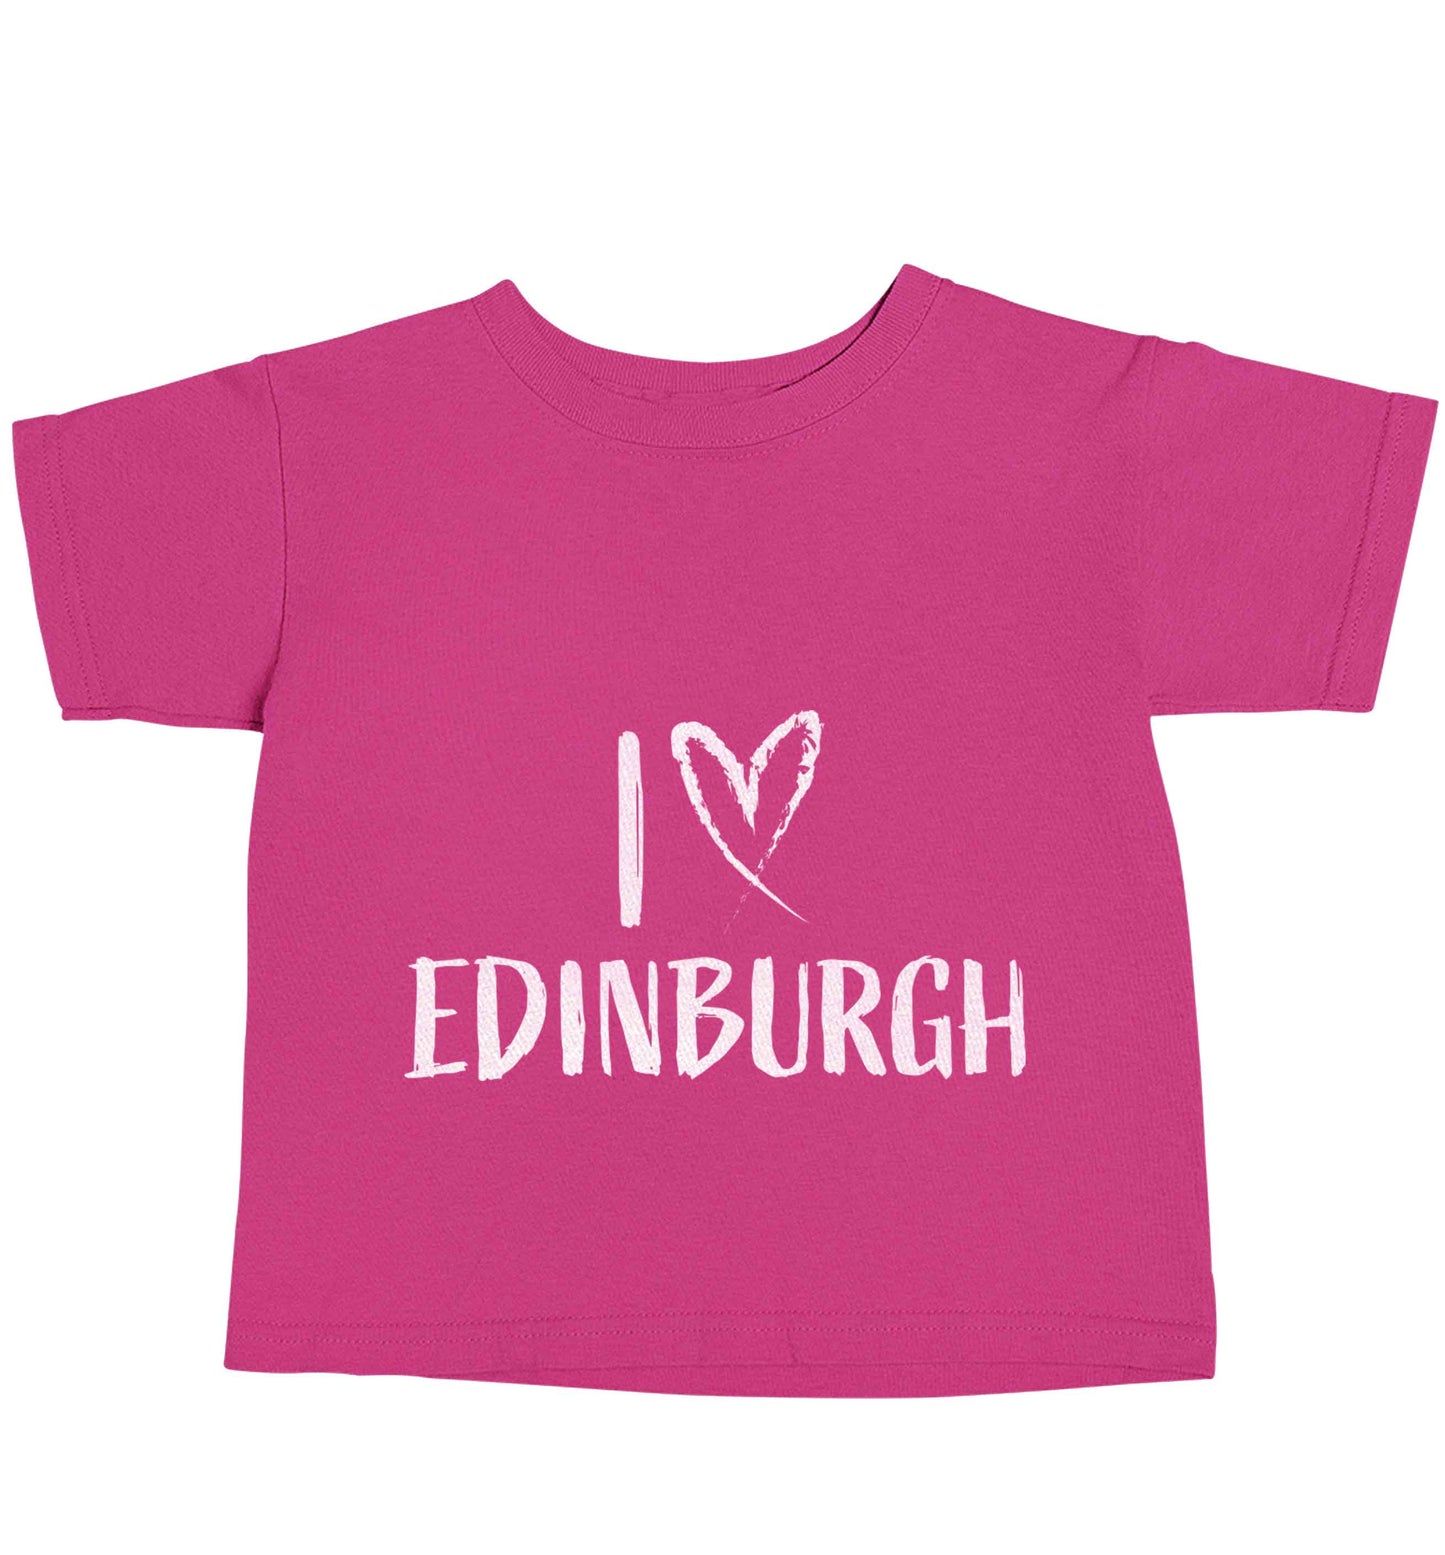 I love Edinburgh pink baby toddler Tshirt 2 Years